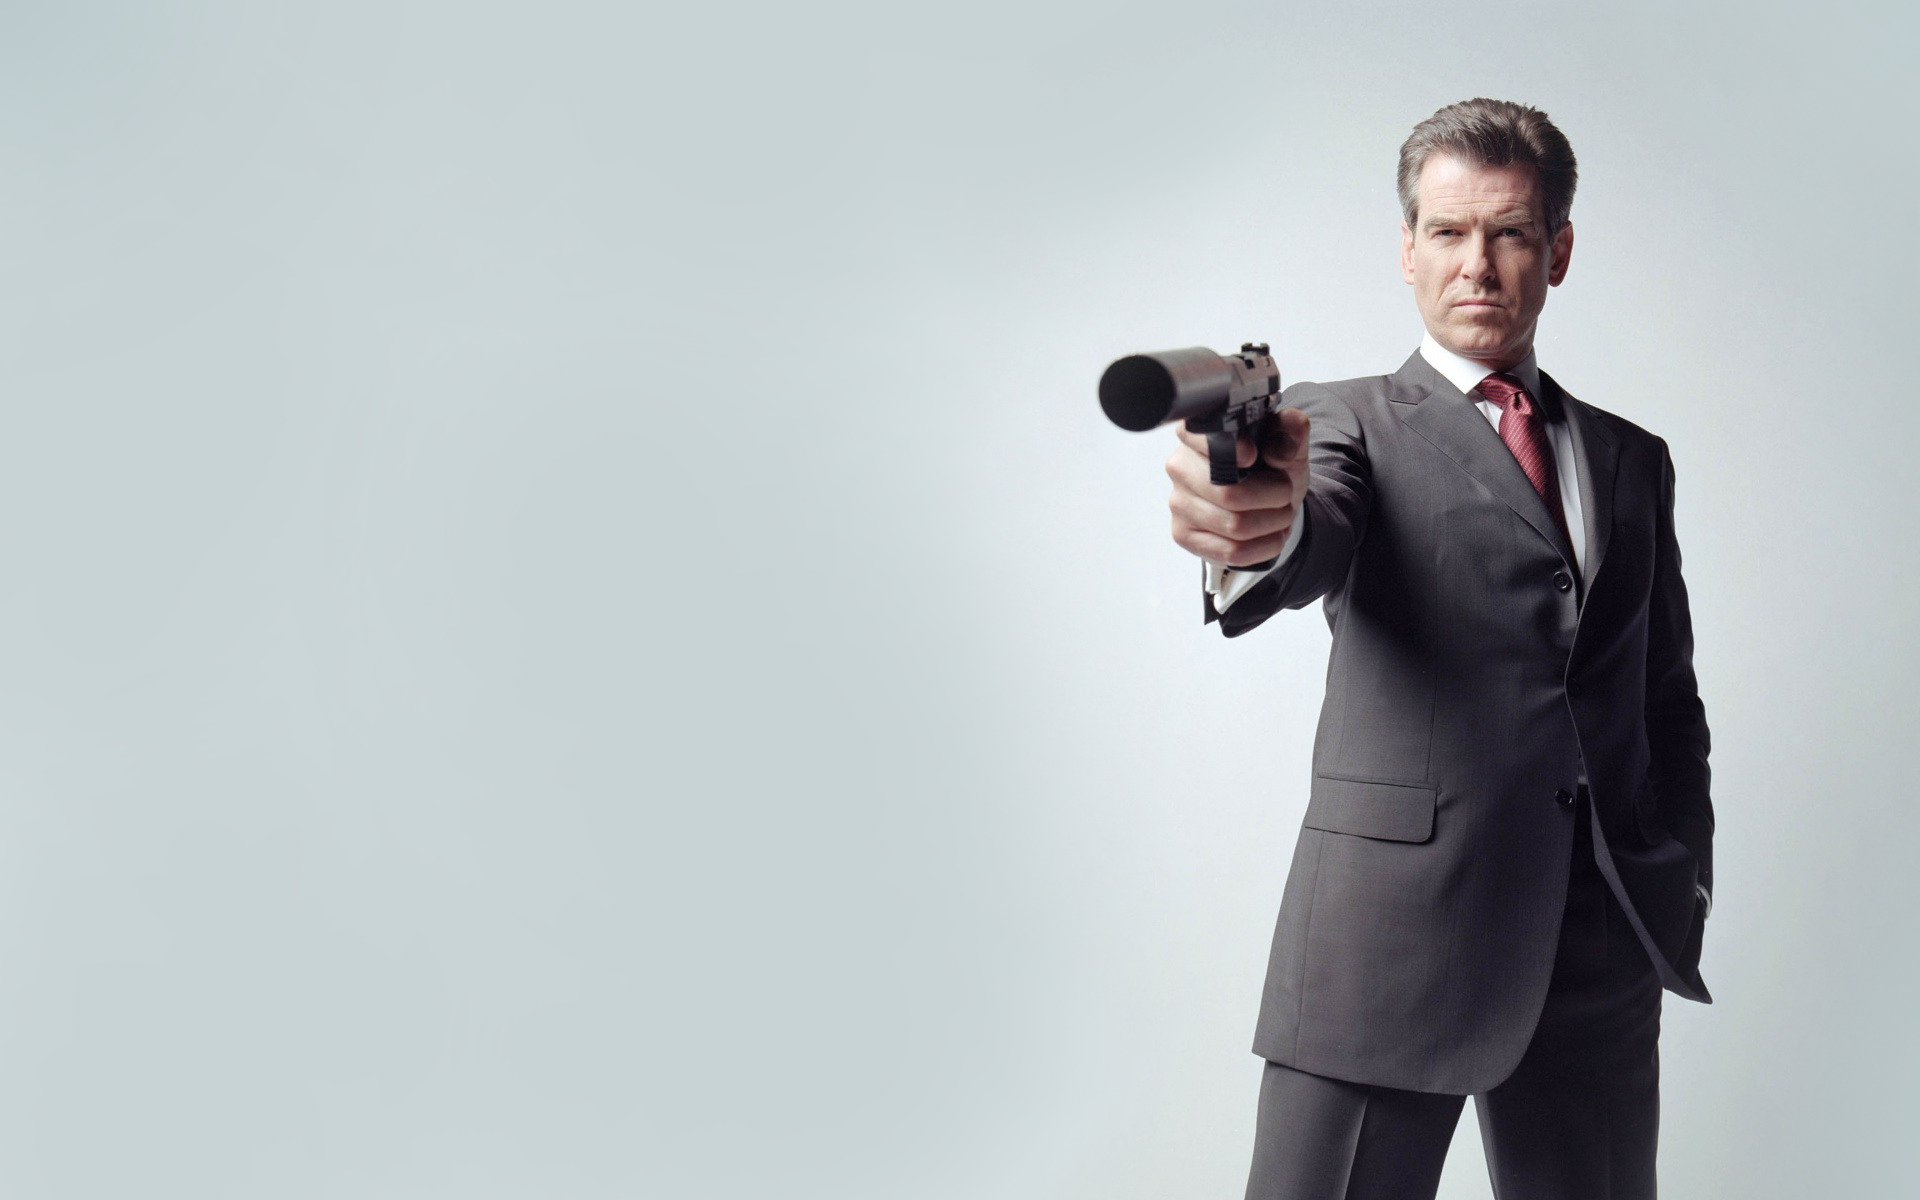 007 Wallpaper - Bing images